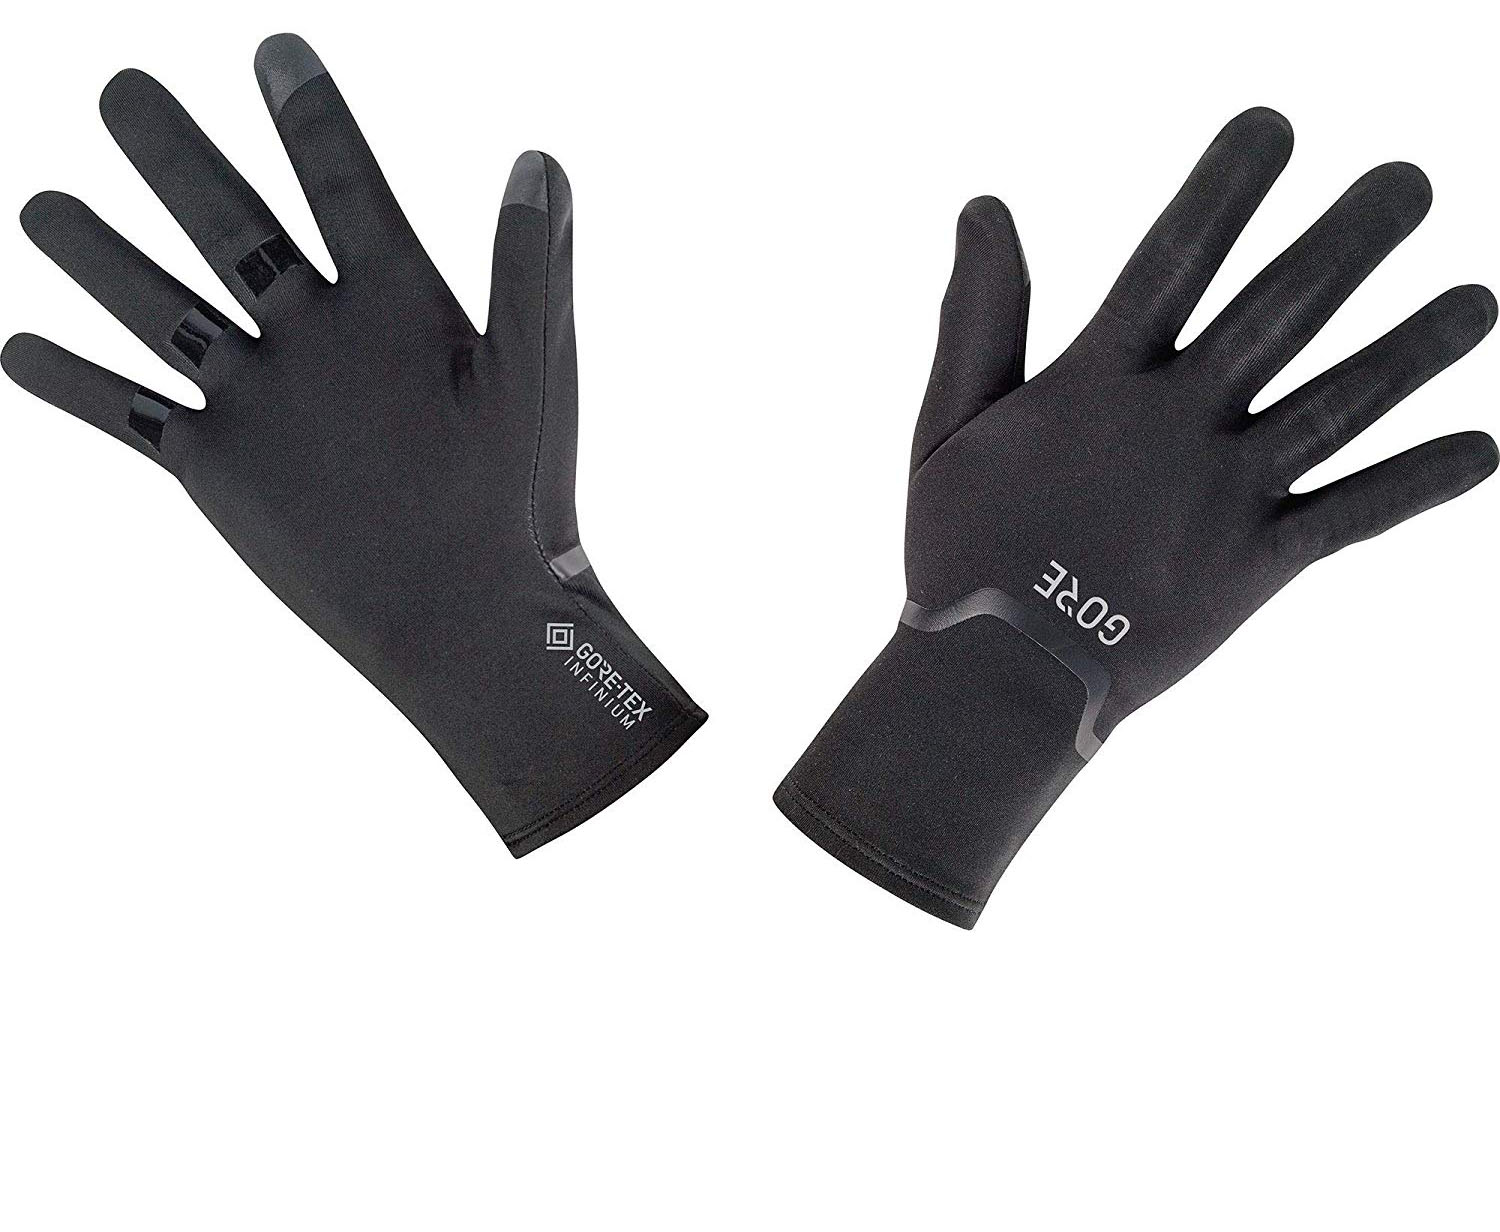 Gore Wear goes to Infinium & beyond w/ new Gore-Tex stretch glove technology